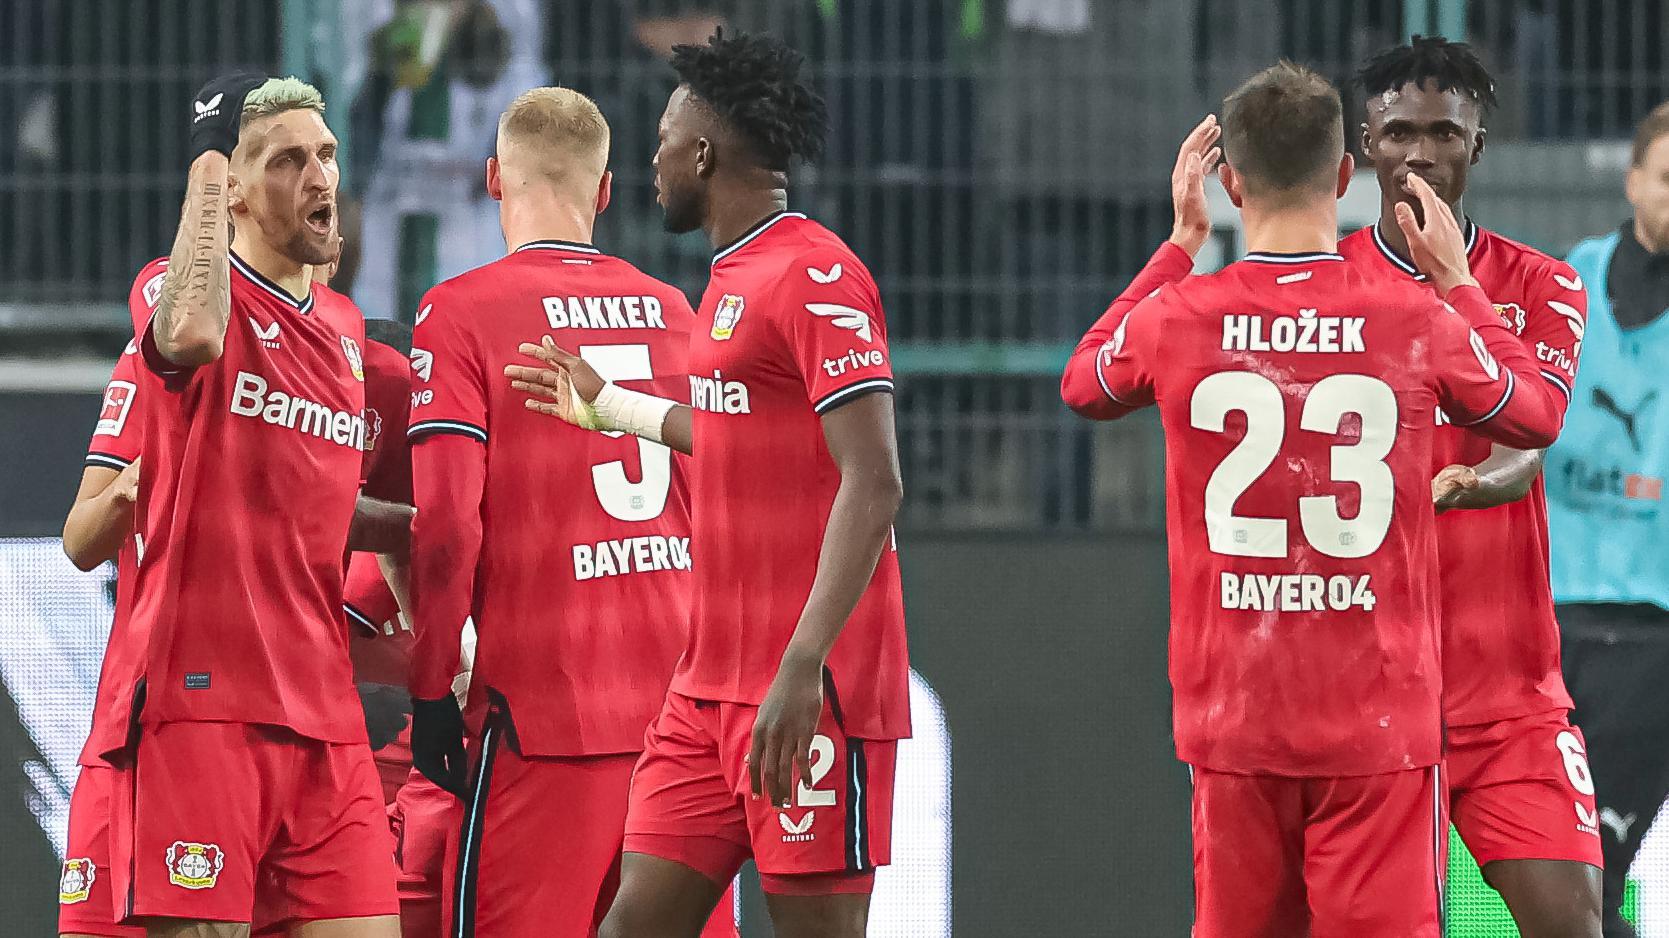 Bayer Leverkusen 3-2 Borussia Monchengladbach (Jan 22, 2023) Final